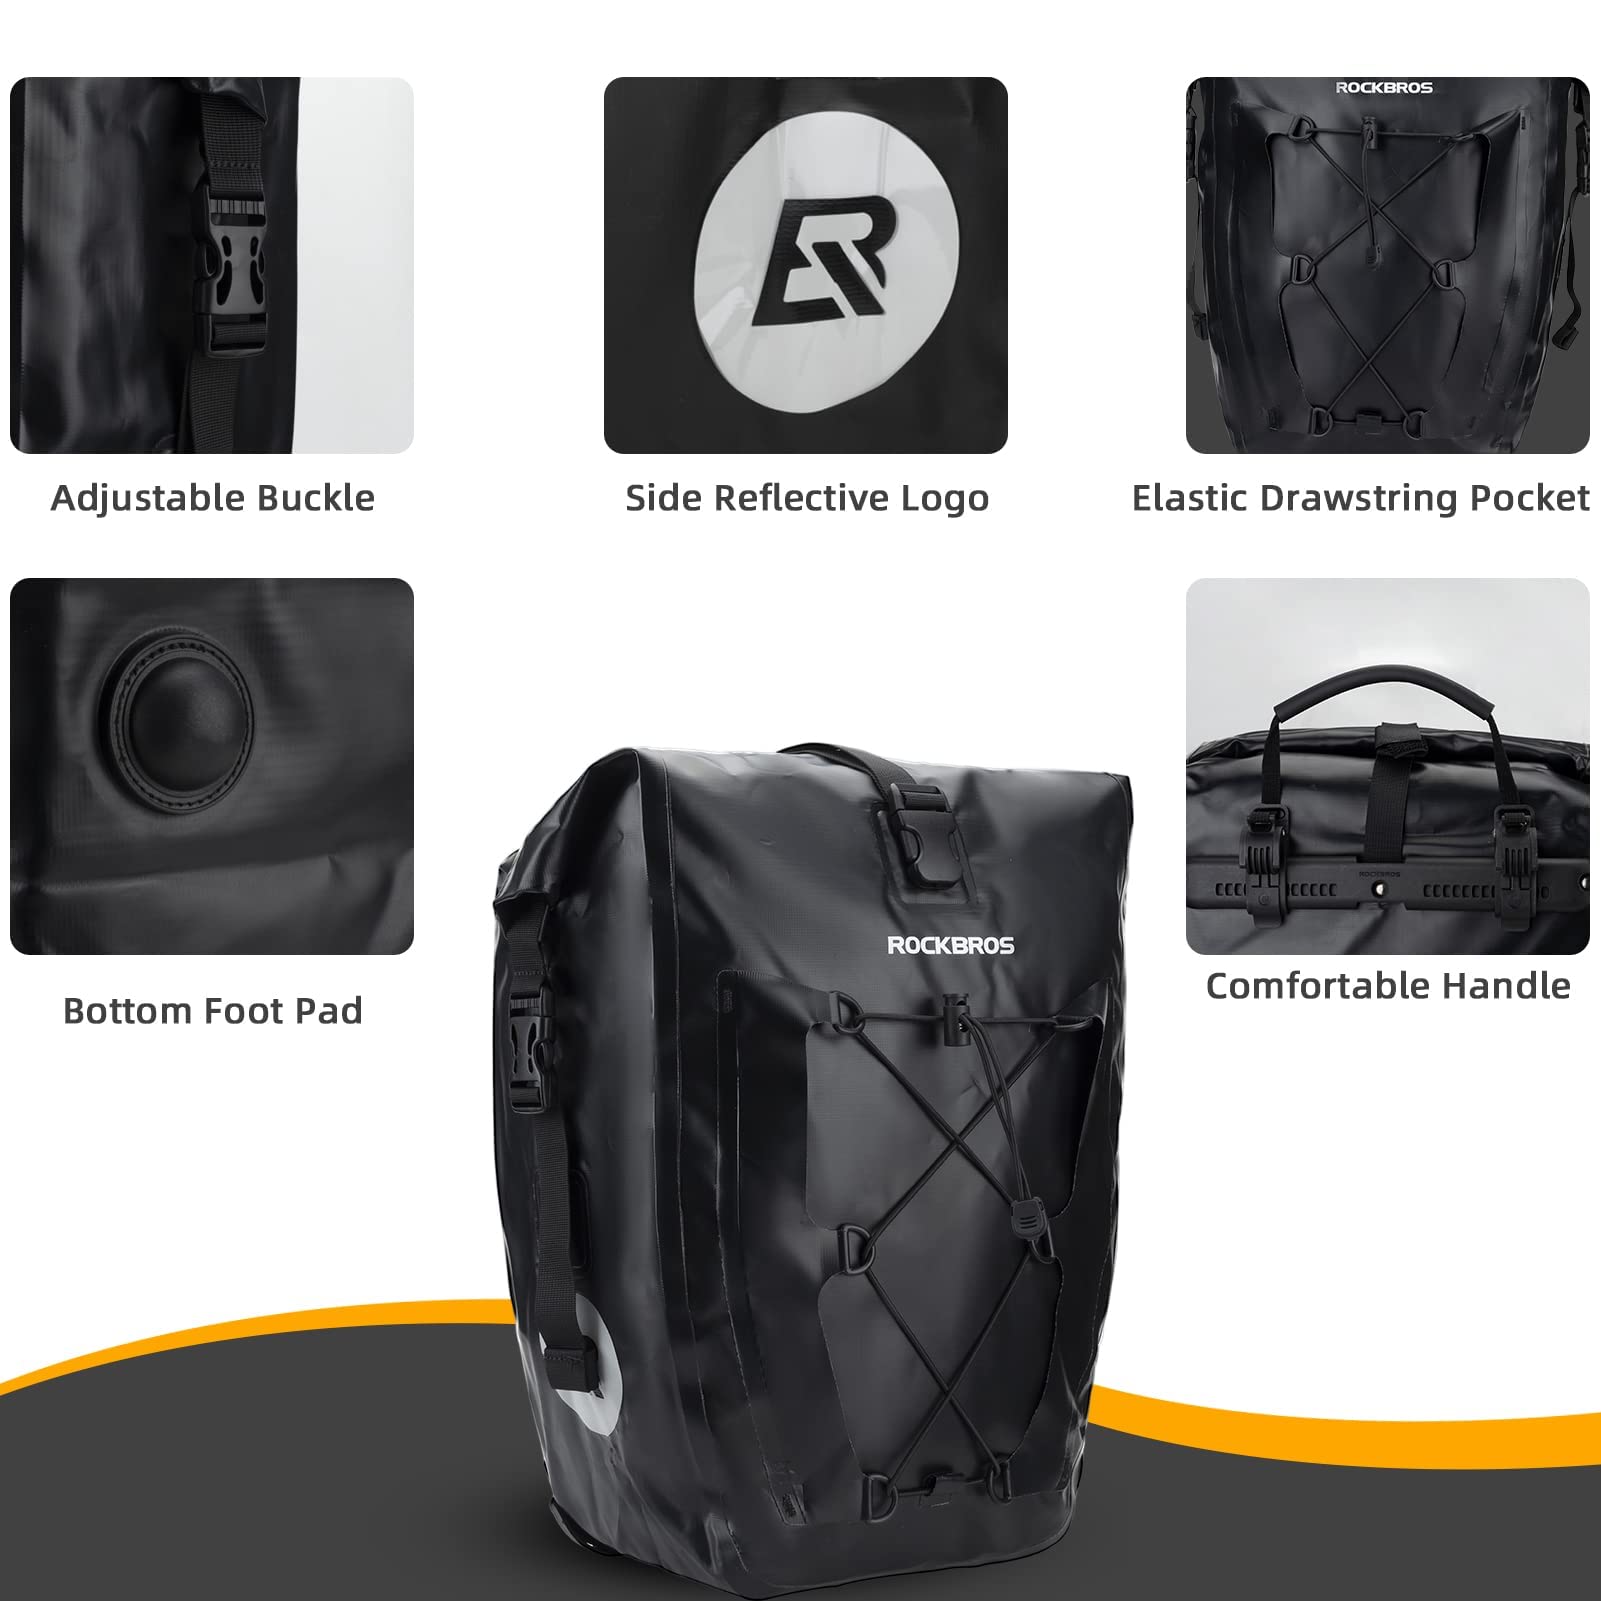 ROCKBROS Bike Pannier Bag 25L 32L 100% Waterproof Rear Rack Bike Bag #Style_Gray-2pcs